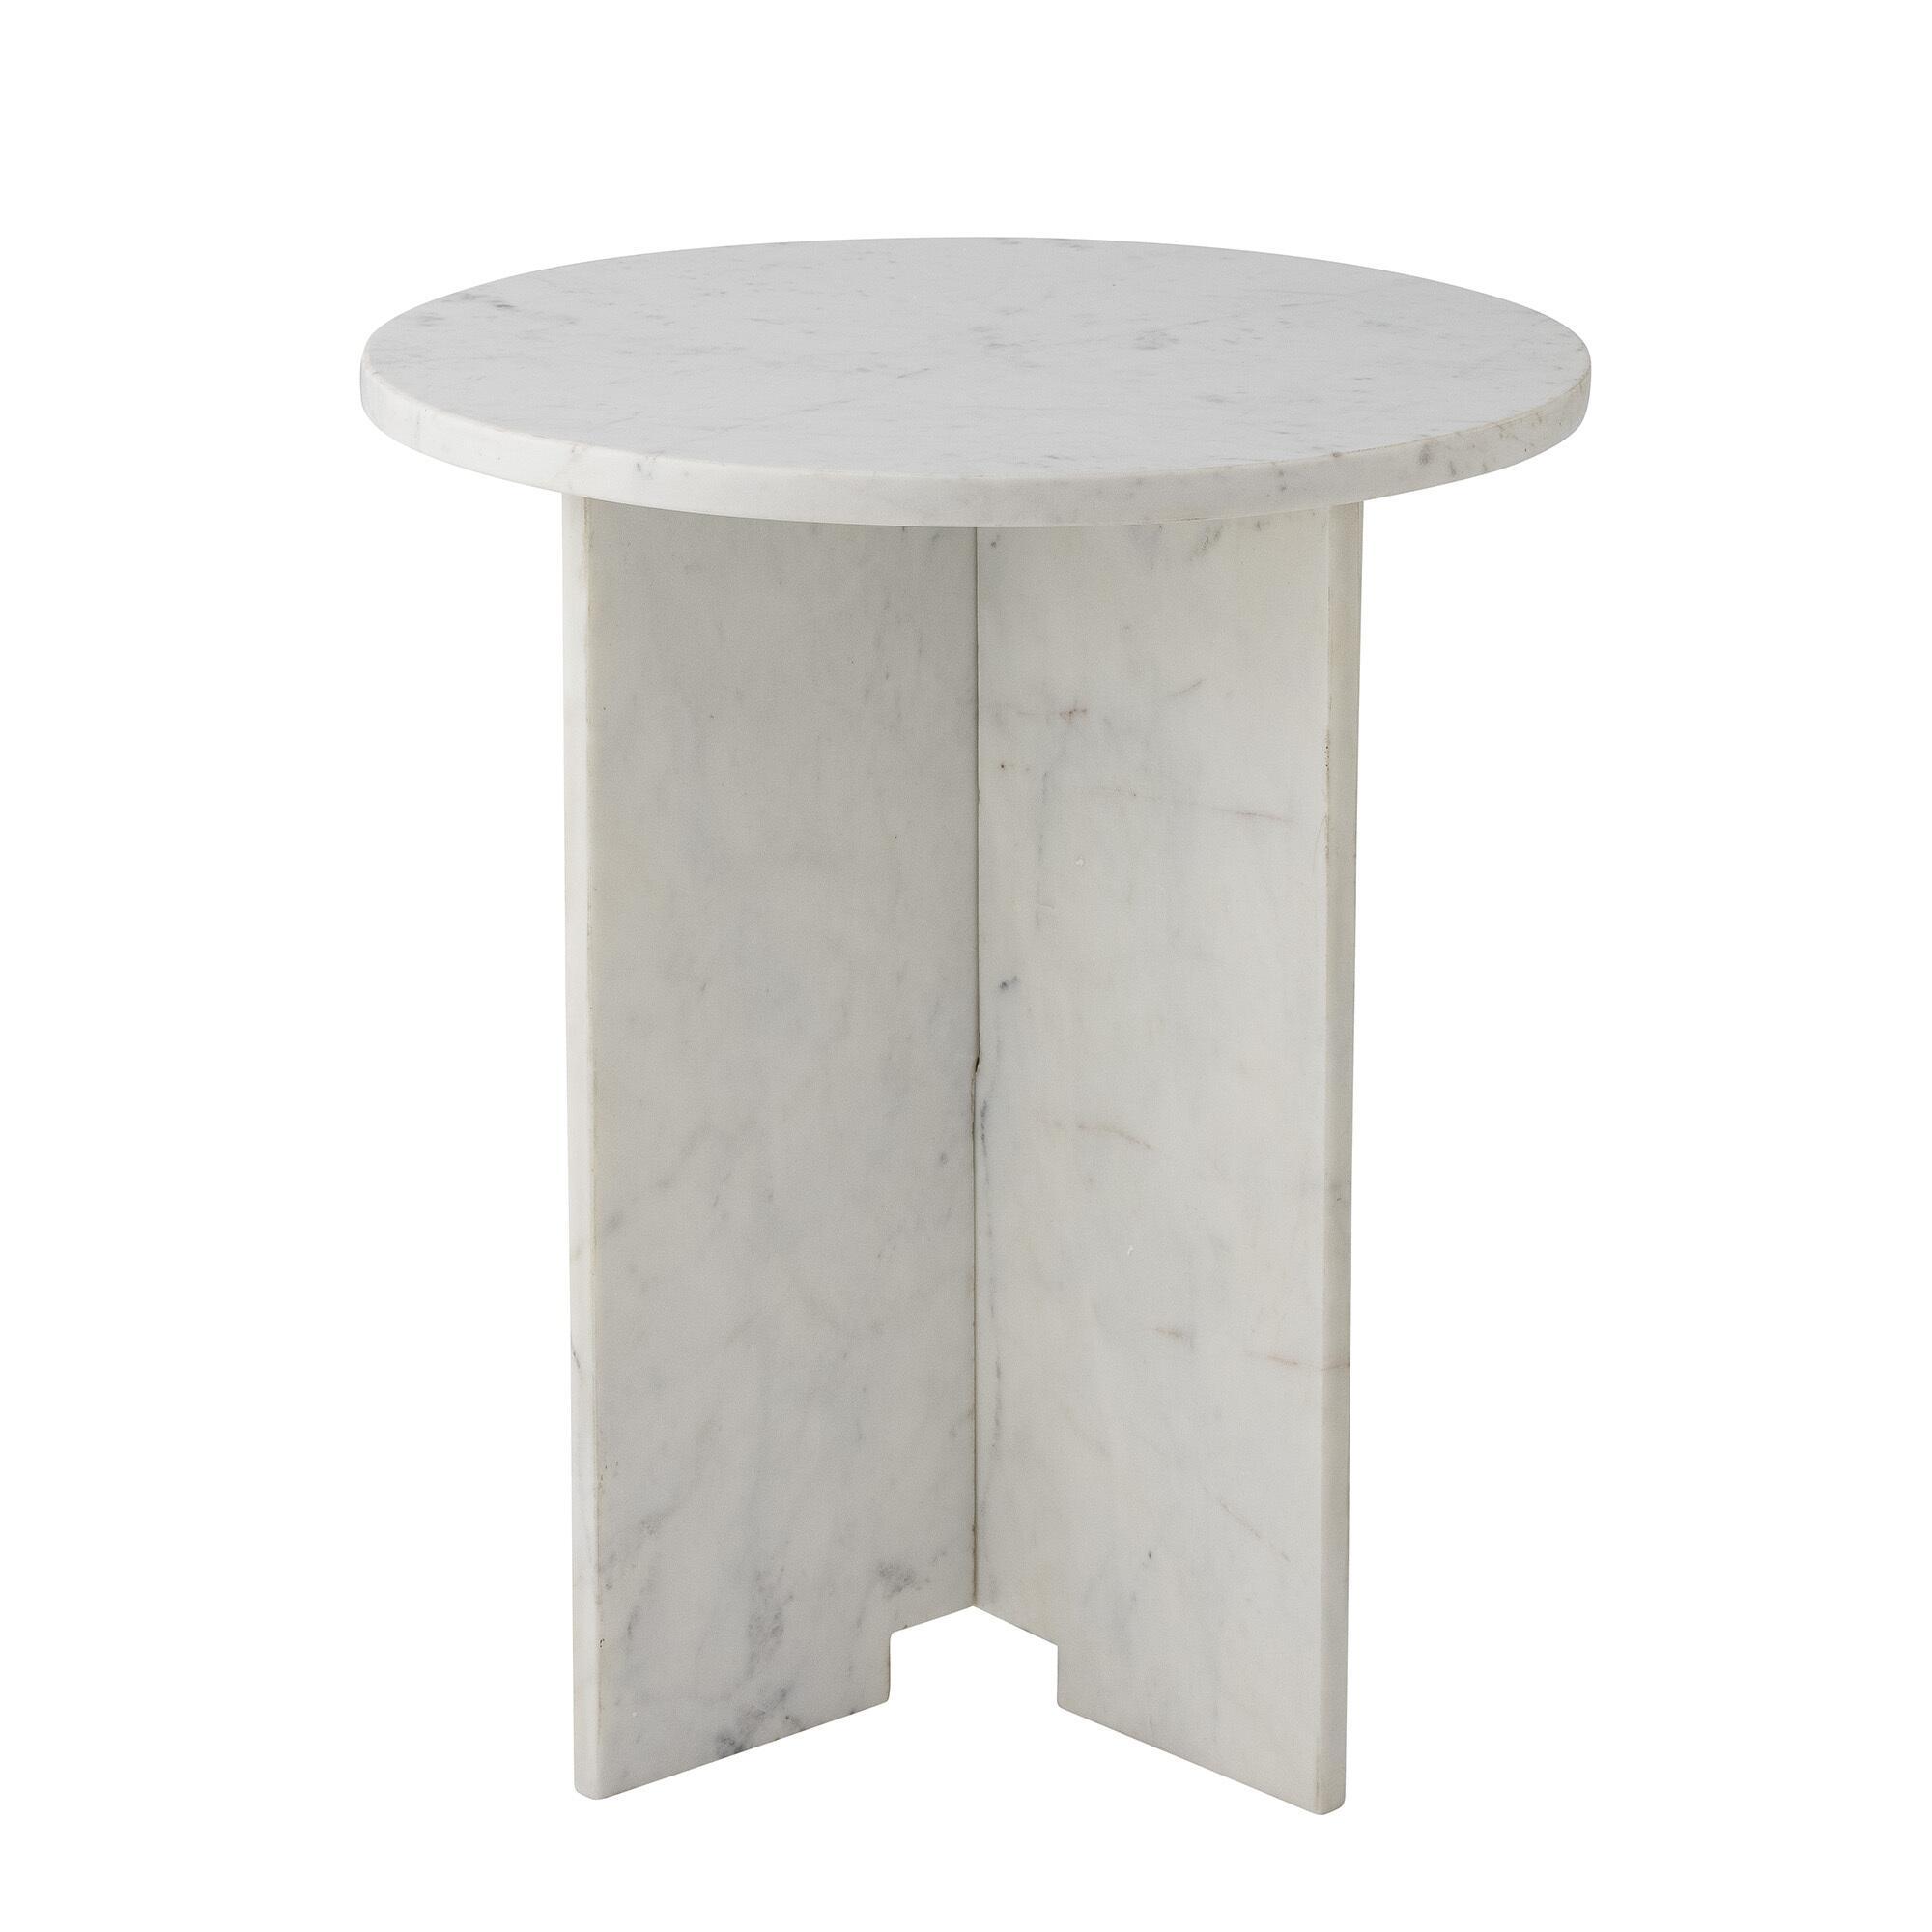  Jasmia Sidebord i marmor - hvid fra Bloomingville i Marmor (Varenr: 82057280)